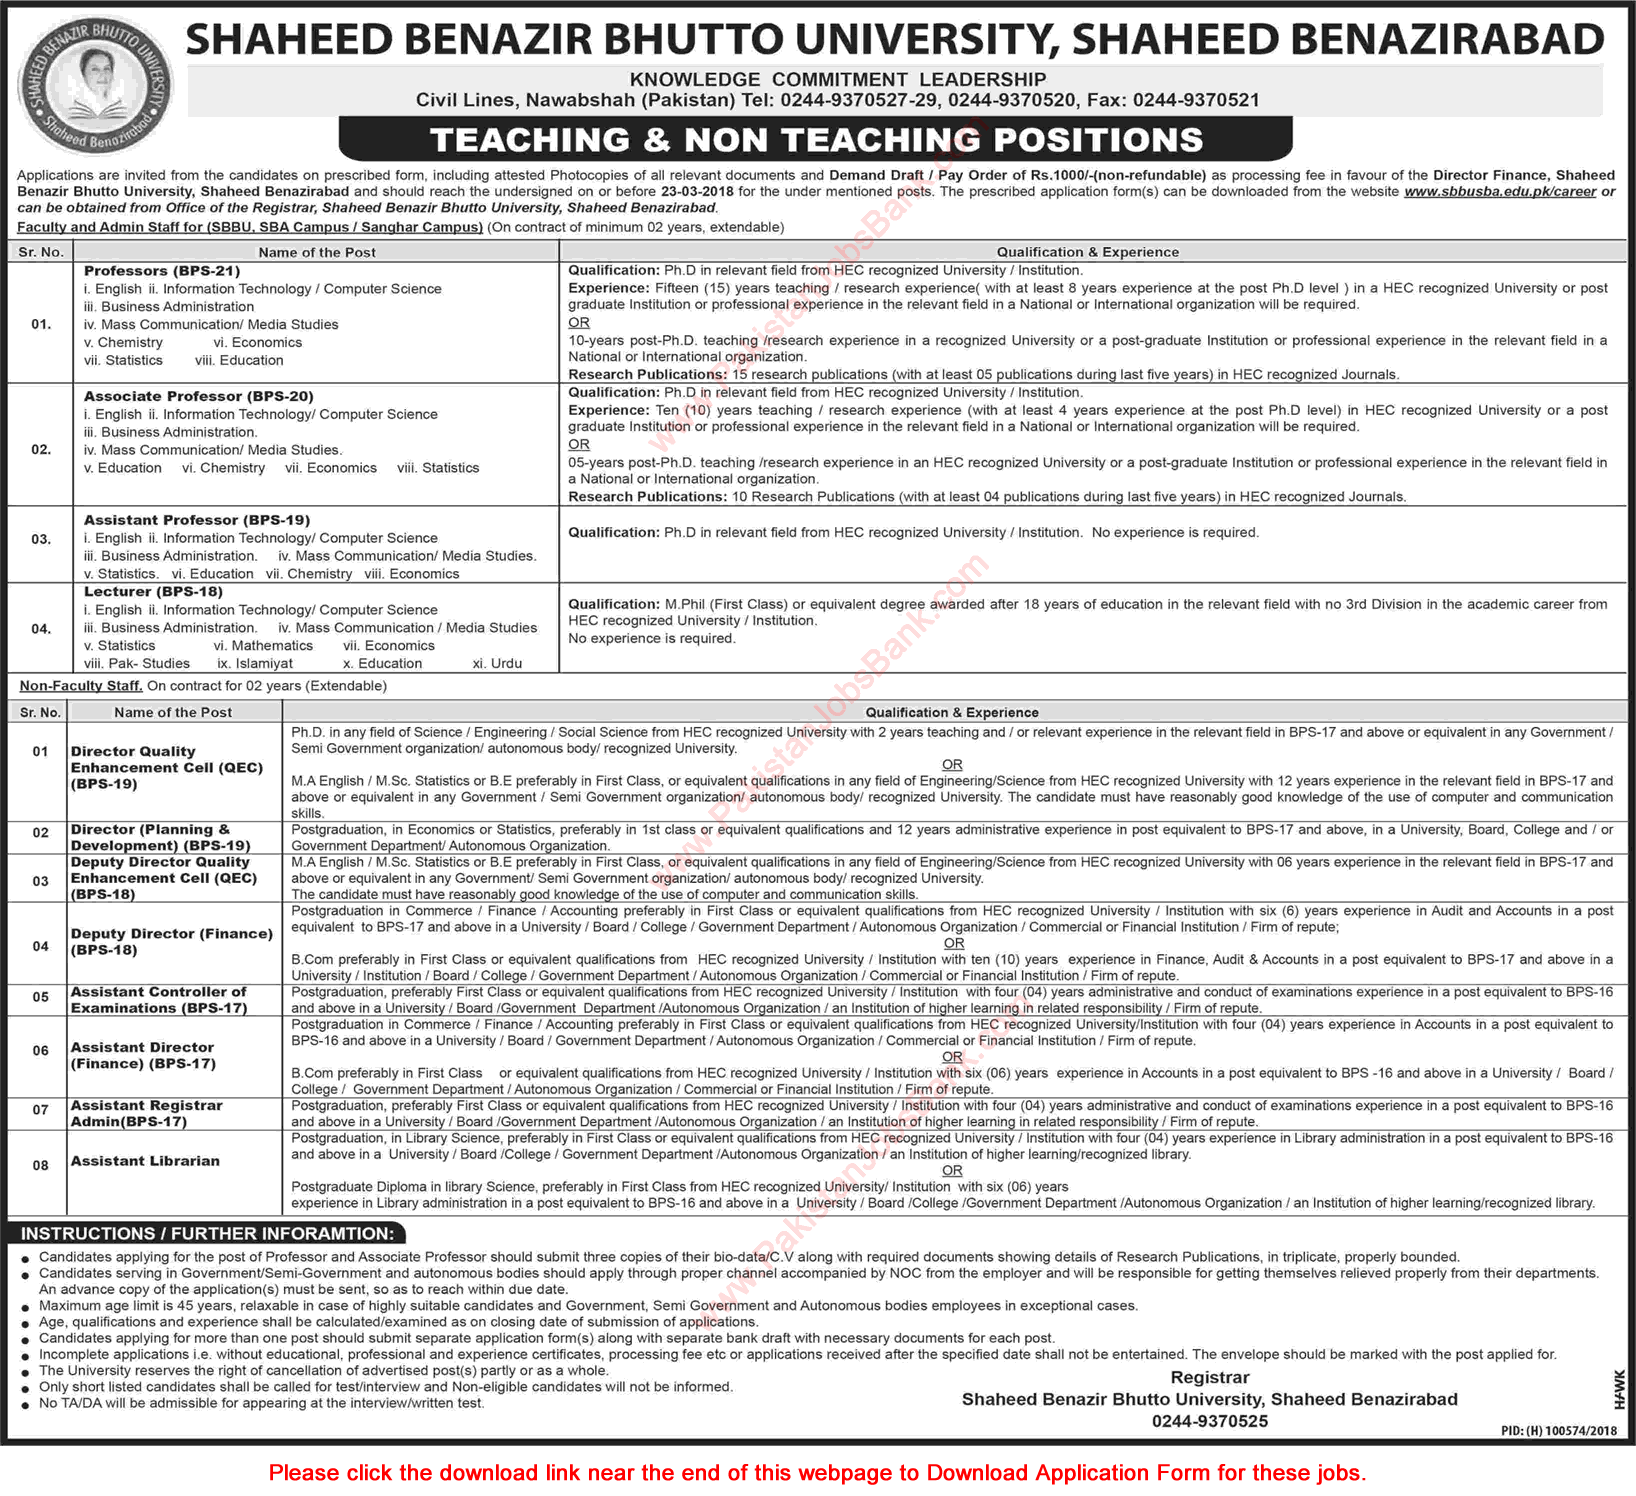 Shaheed Benazir Bhutto University Shaheed Benazirabad Jobs 2018 March Application Form Download Latest